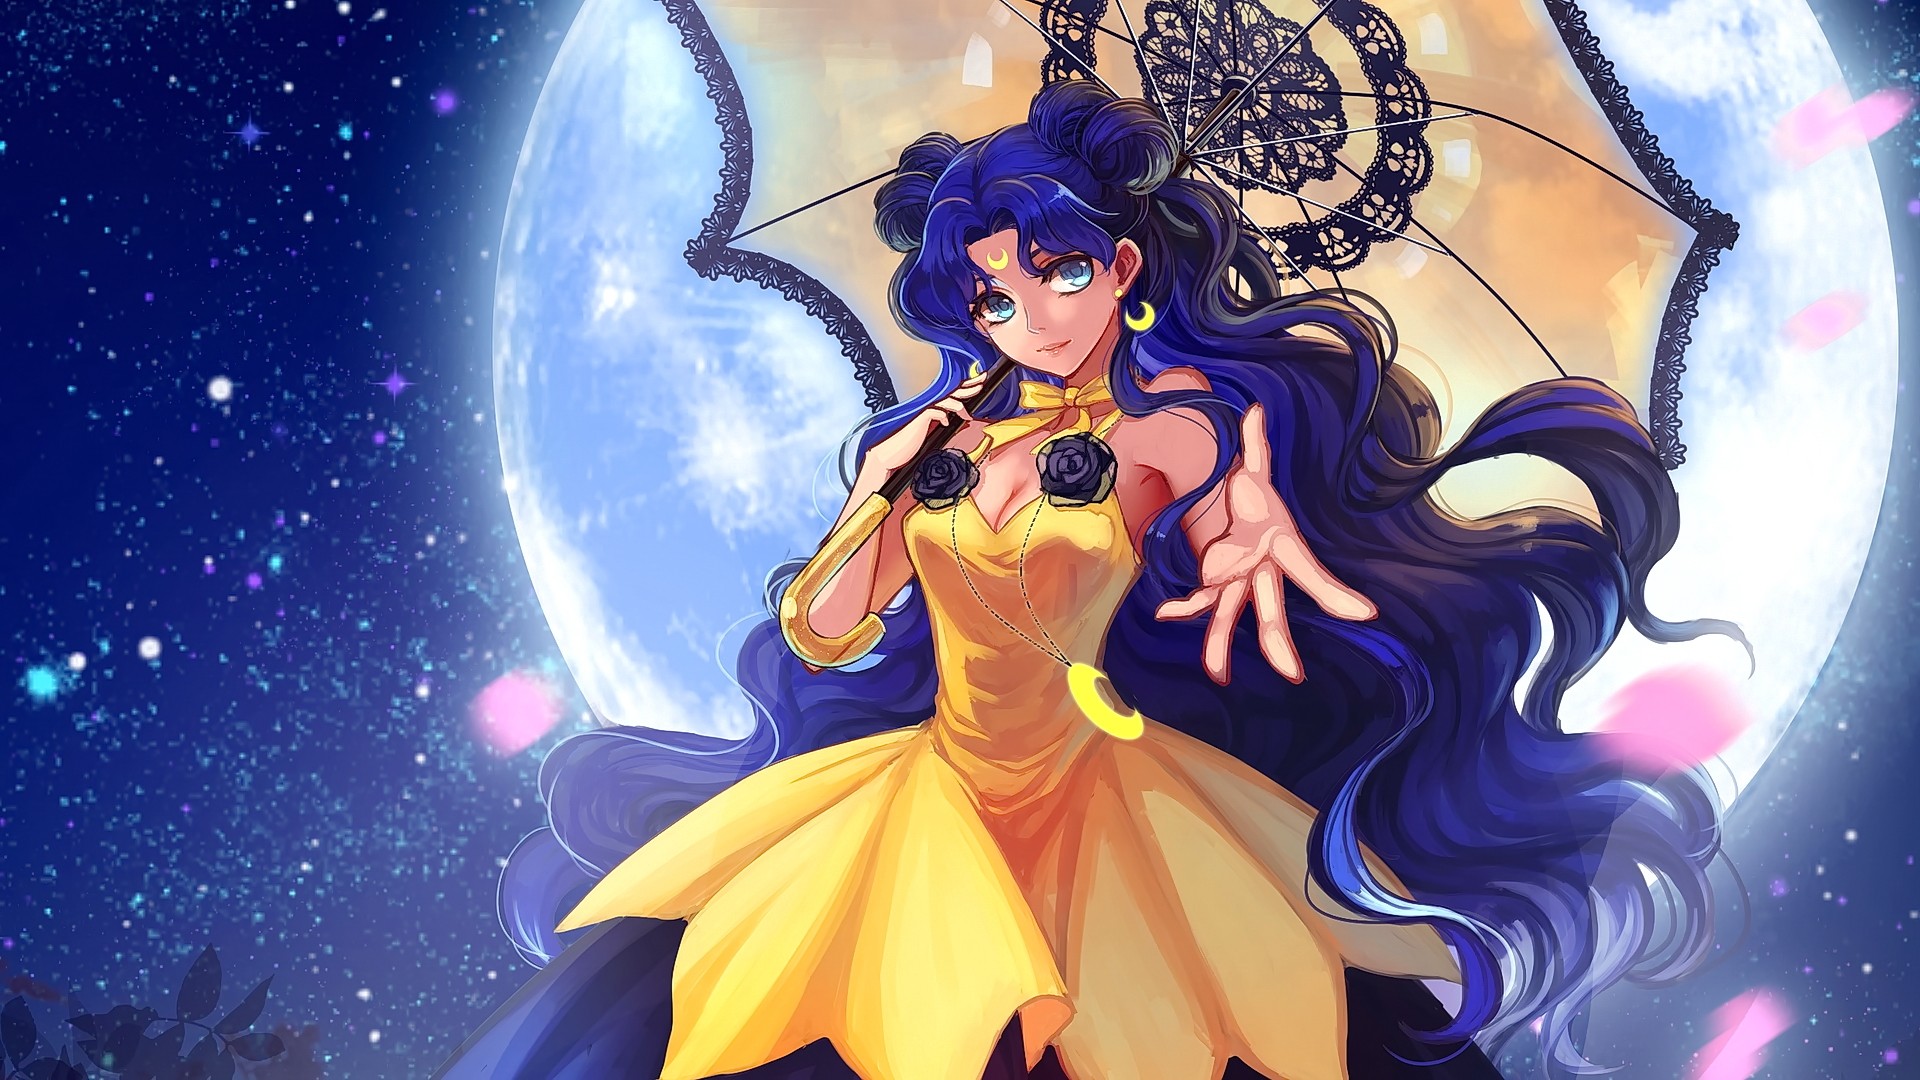 Anime 1920x1080 anime anime girls Moon blue hair long hair dress umbrella Sailor Moon yellow dress women with umbrella Luna